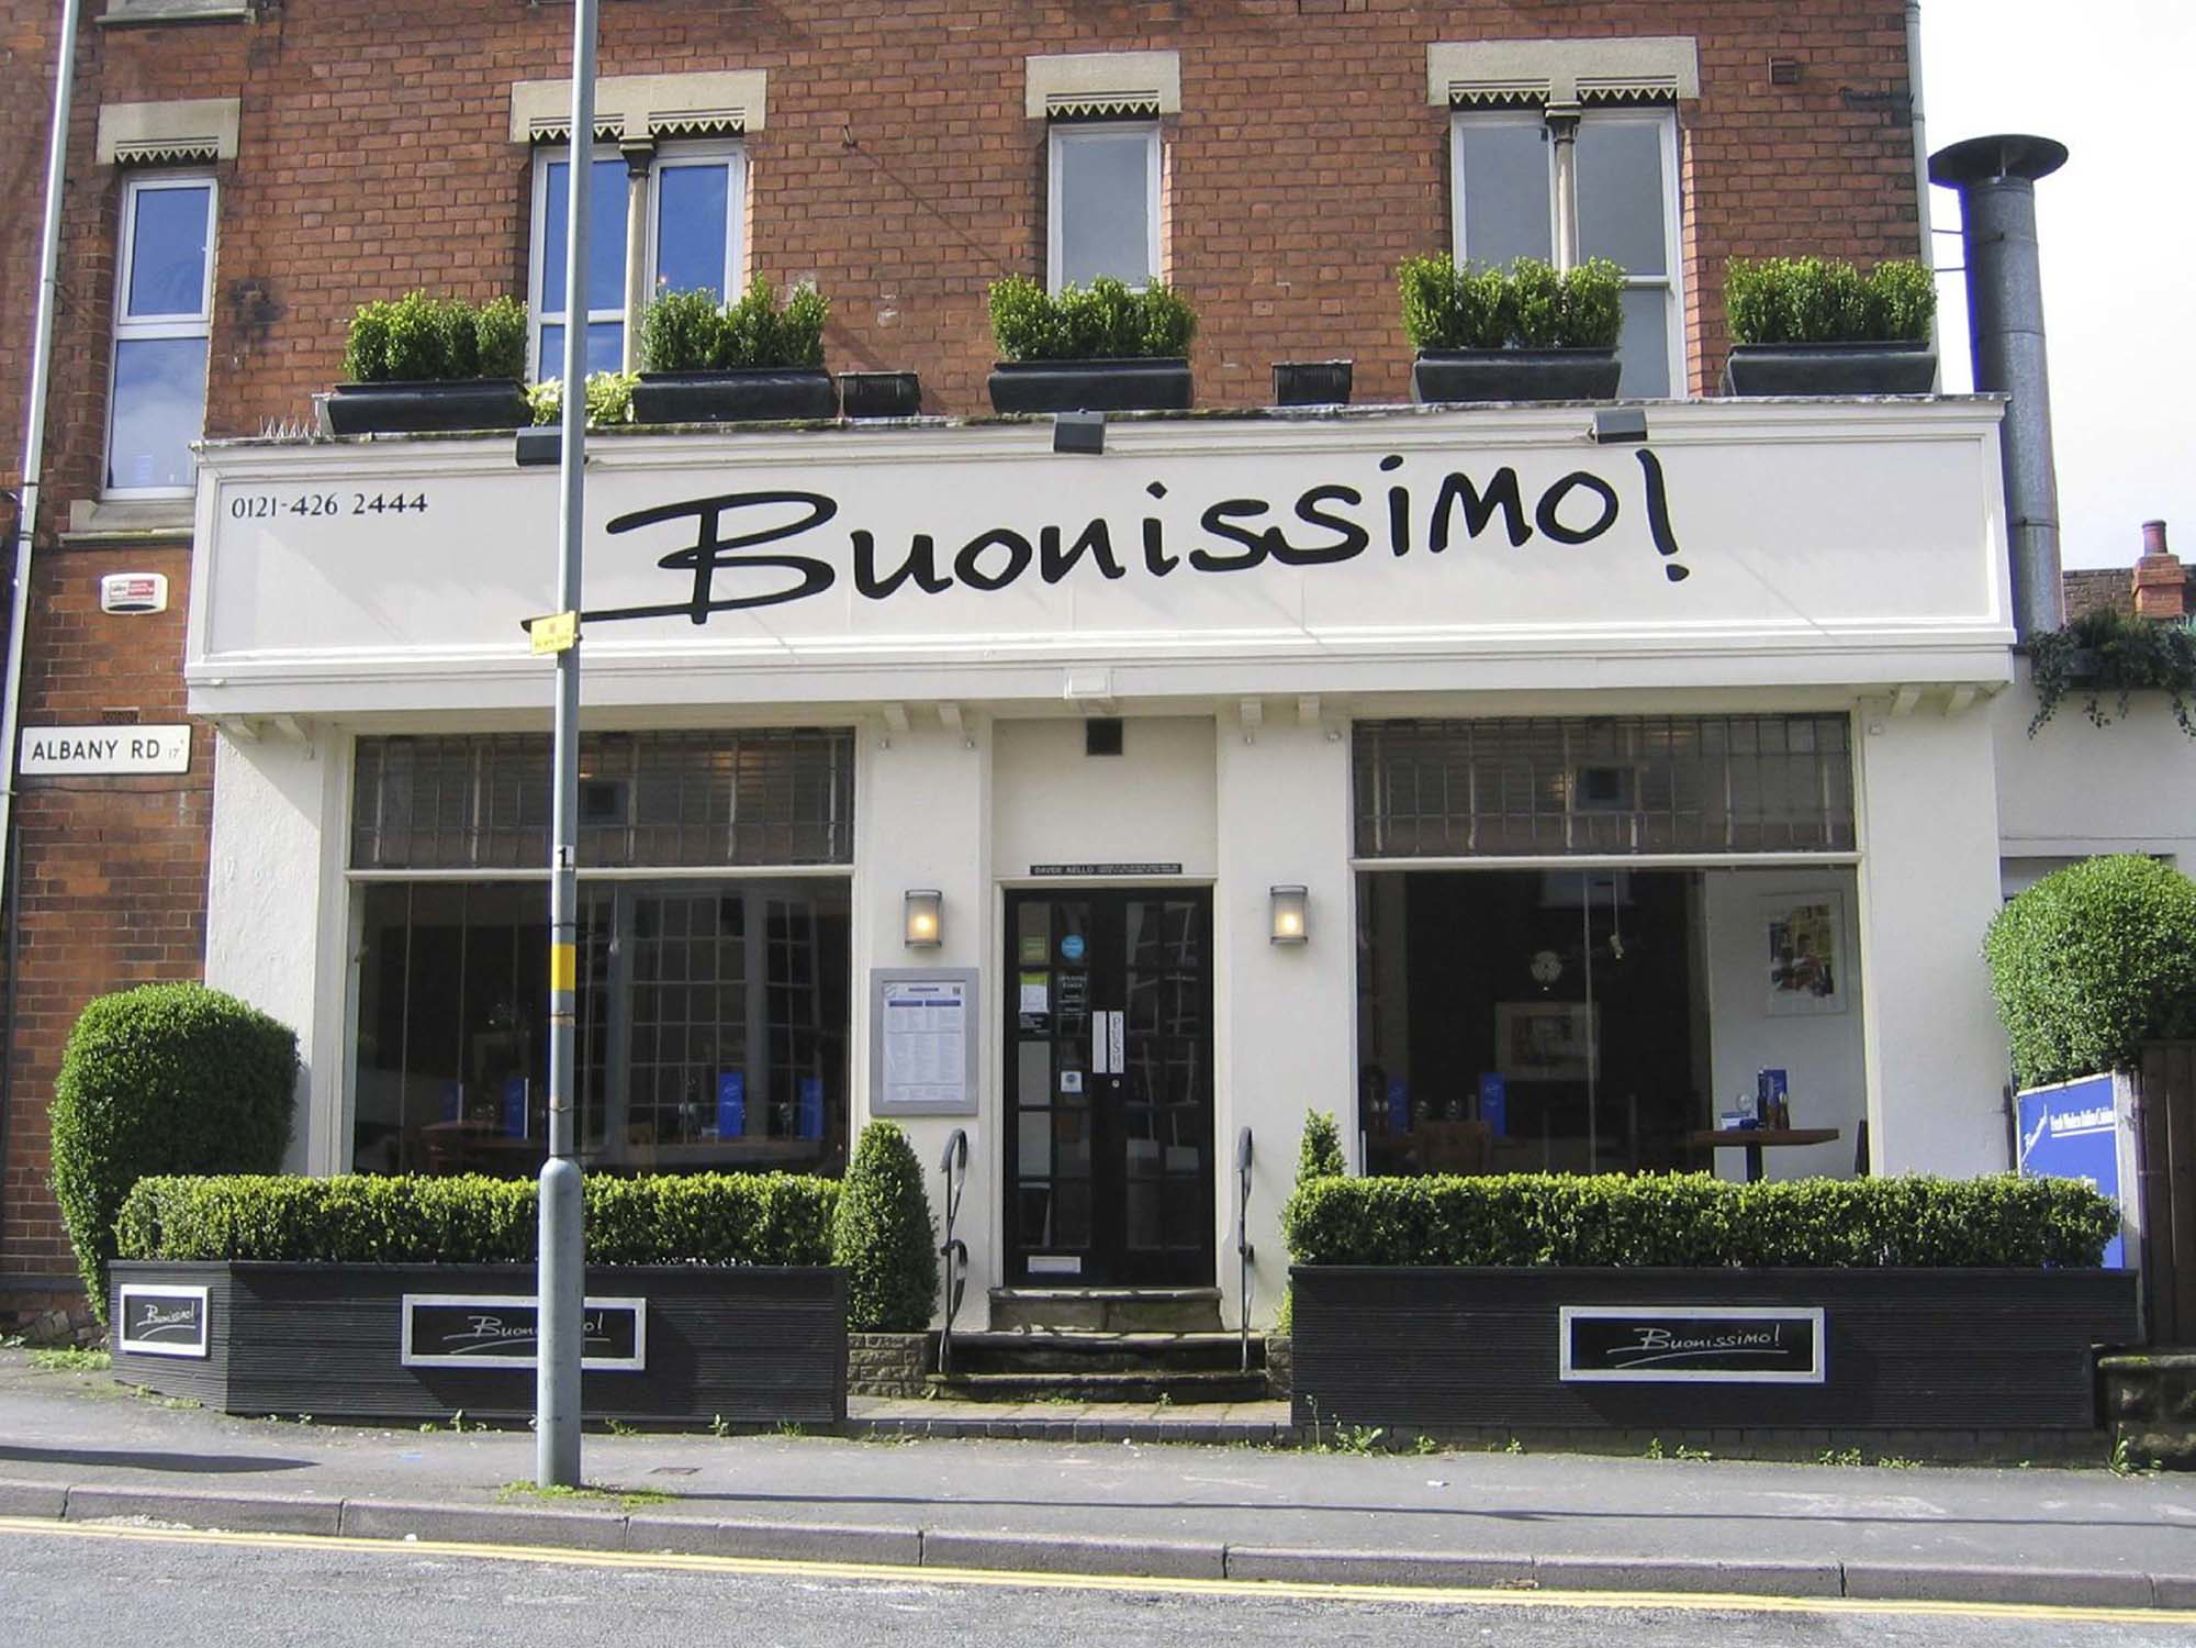 Best Italian Restaurants in Birmingham - Buonissimo